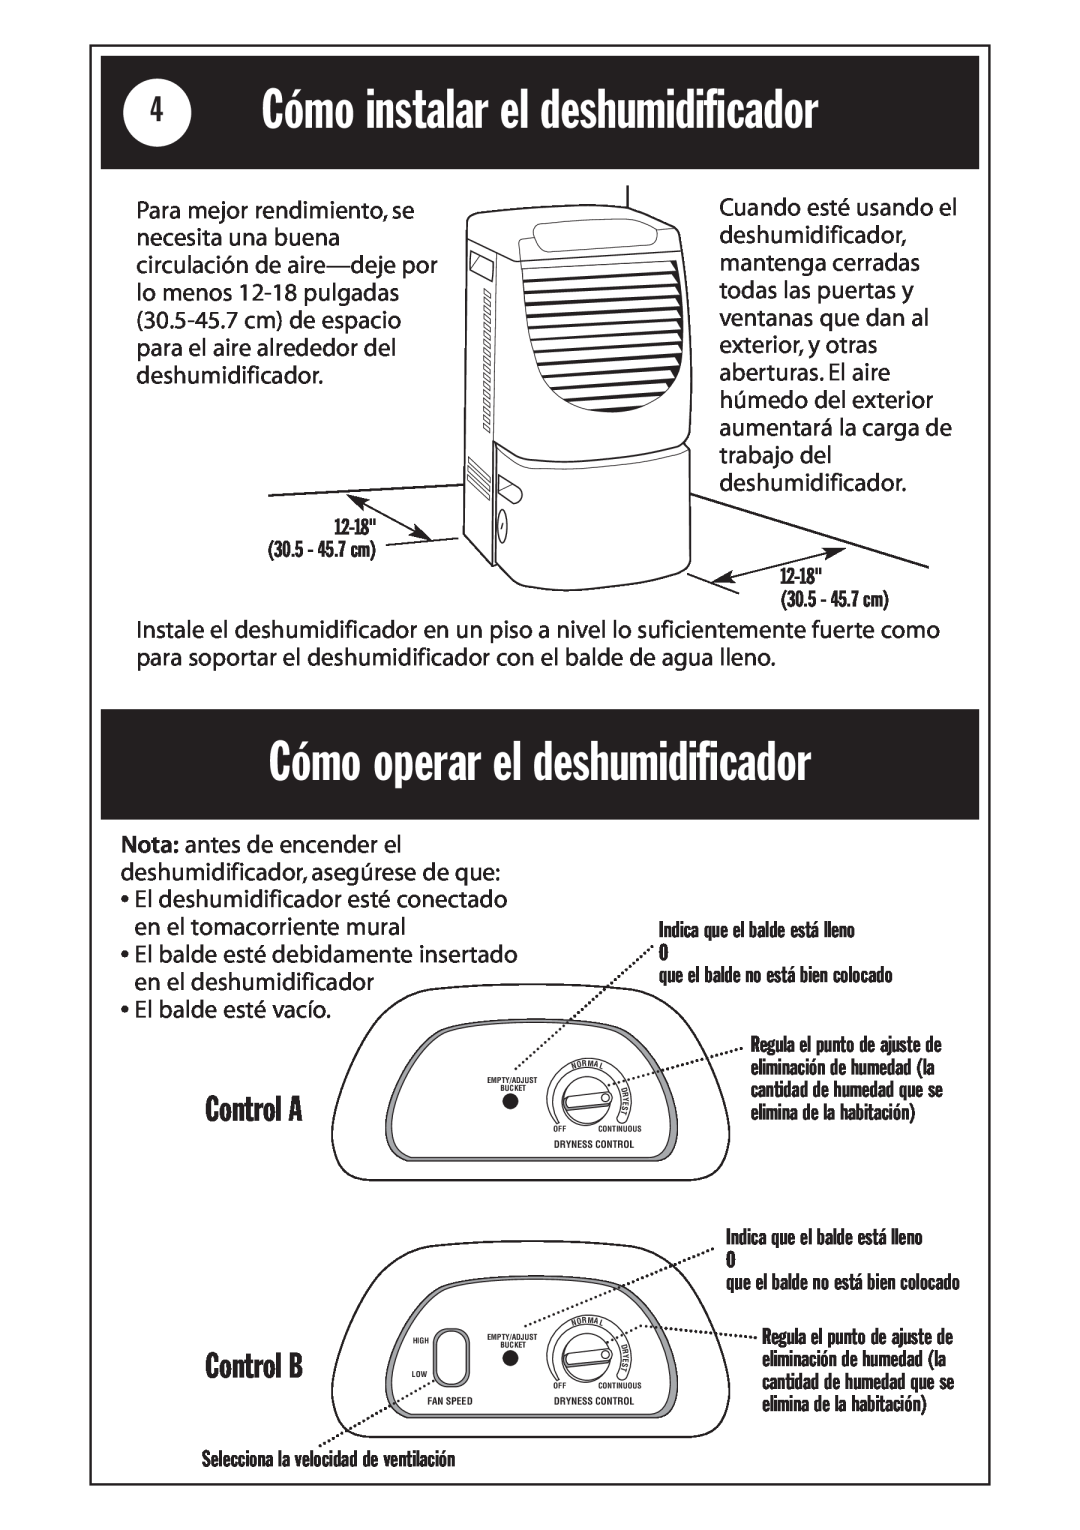 Whirlpool 1185020 manual Cómo operar el deshumidificador, 4Cómo instalar el deshumidificador, Control A, Control B 